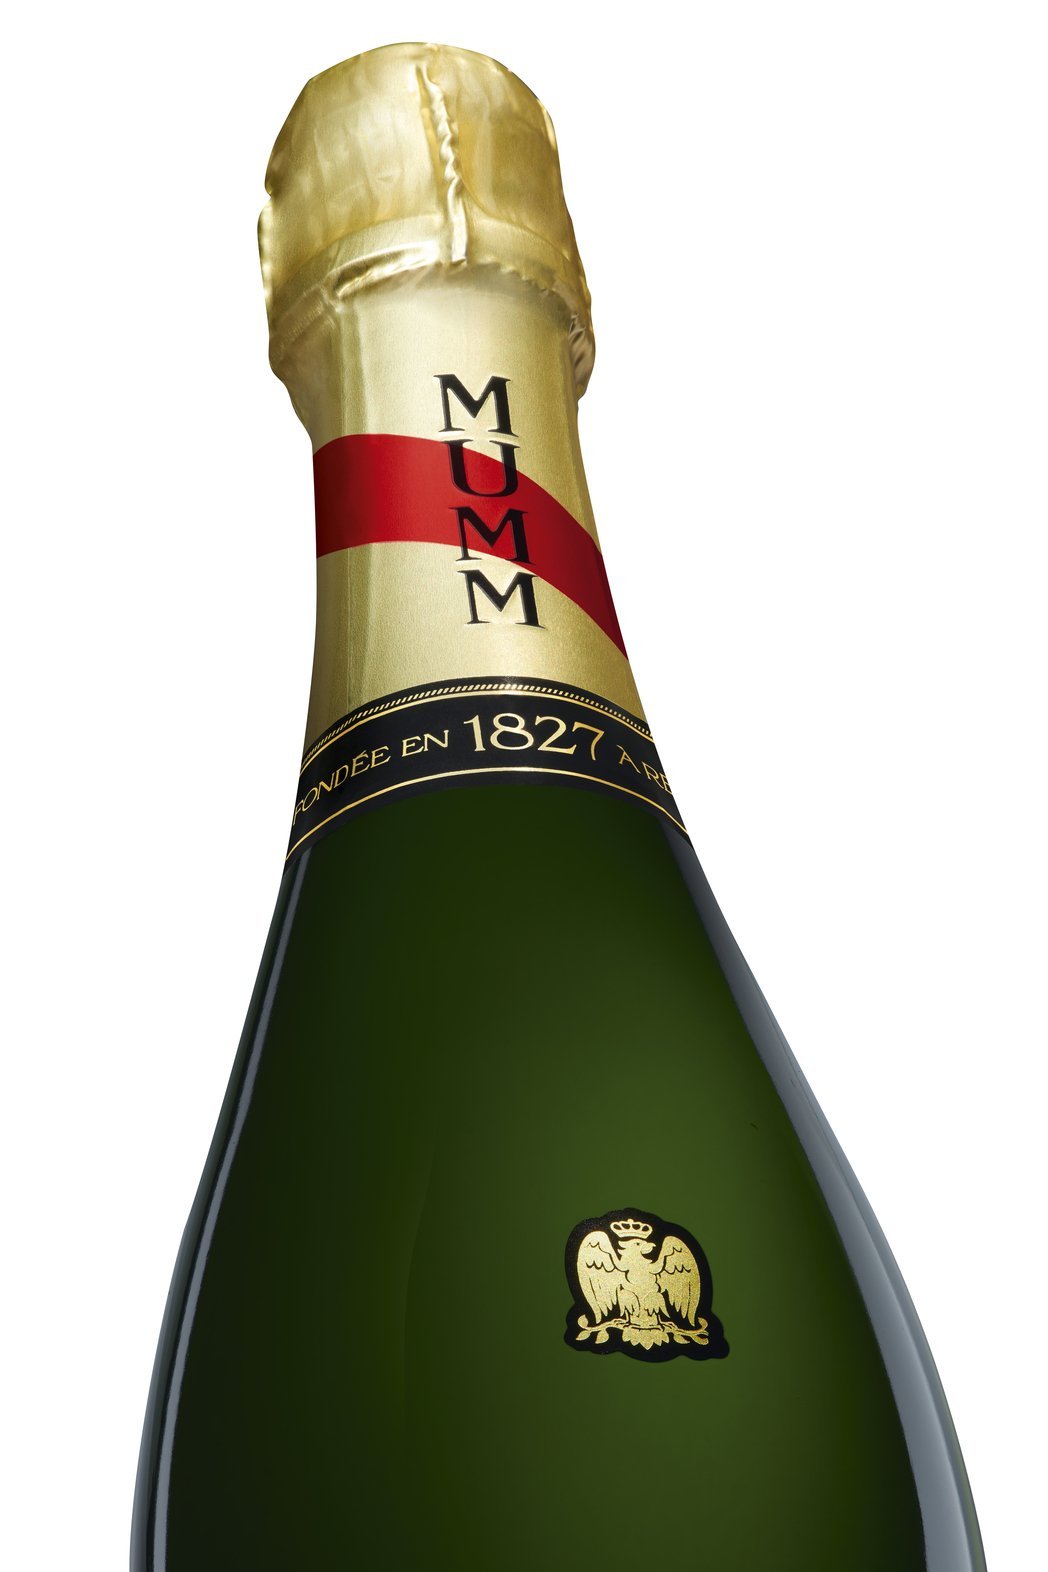 Buy G.H. Mumm G.H. Mumm Cordon Rouge (750mL) Champagne Gift Pack + Two Champagne Glasses at Secret Bottle